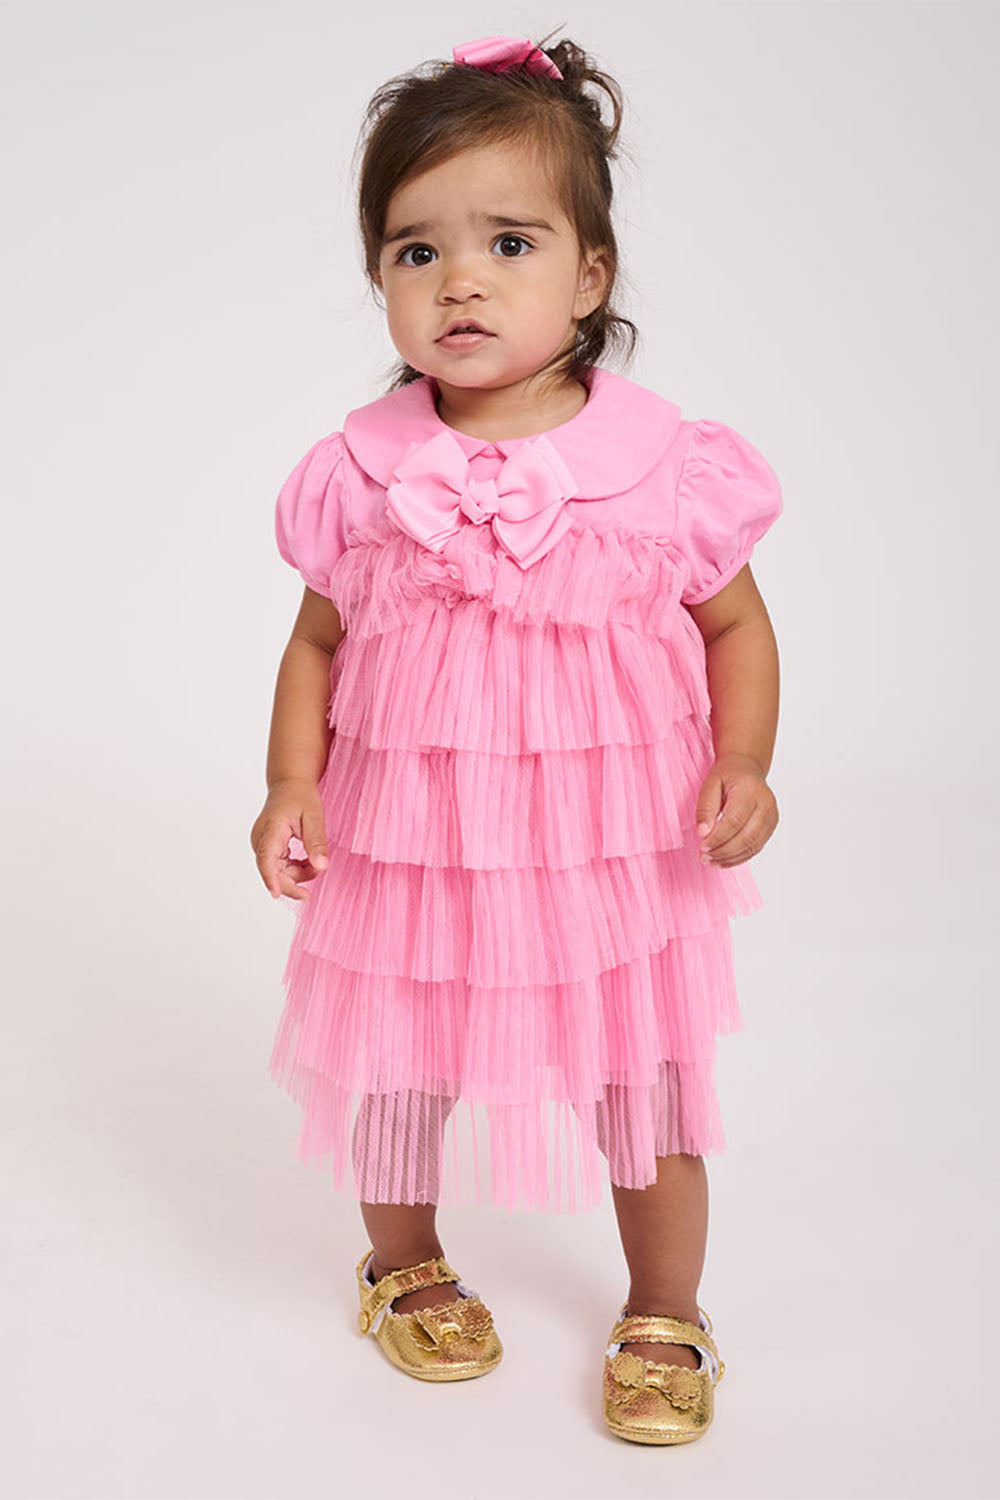 Tallulah Baby Dress - Maison7